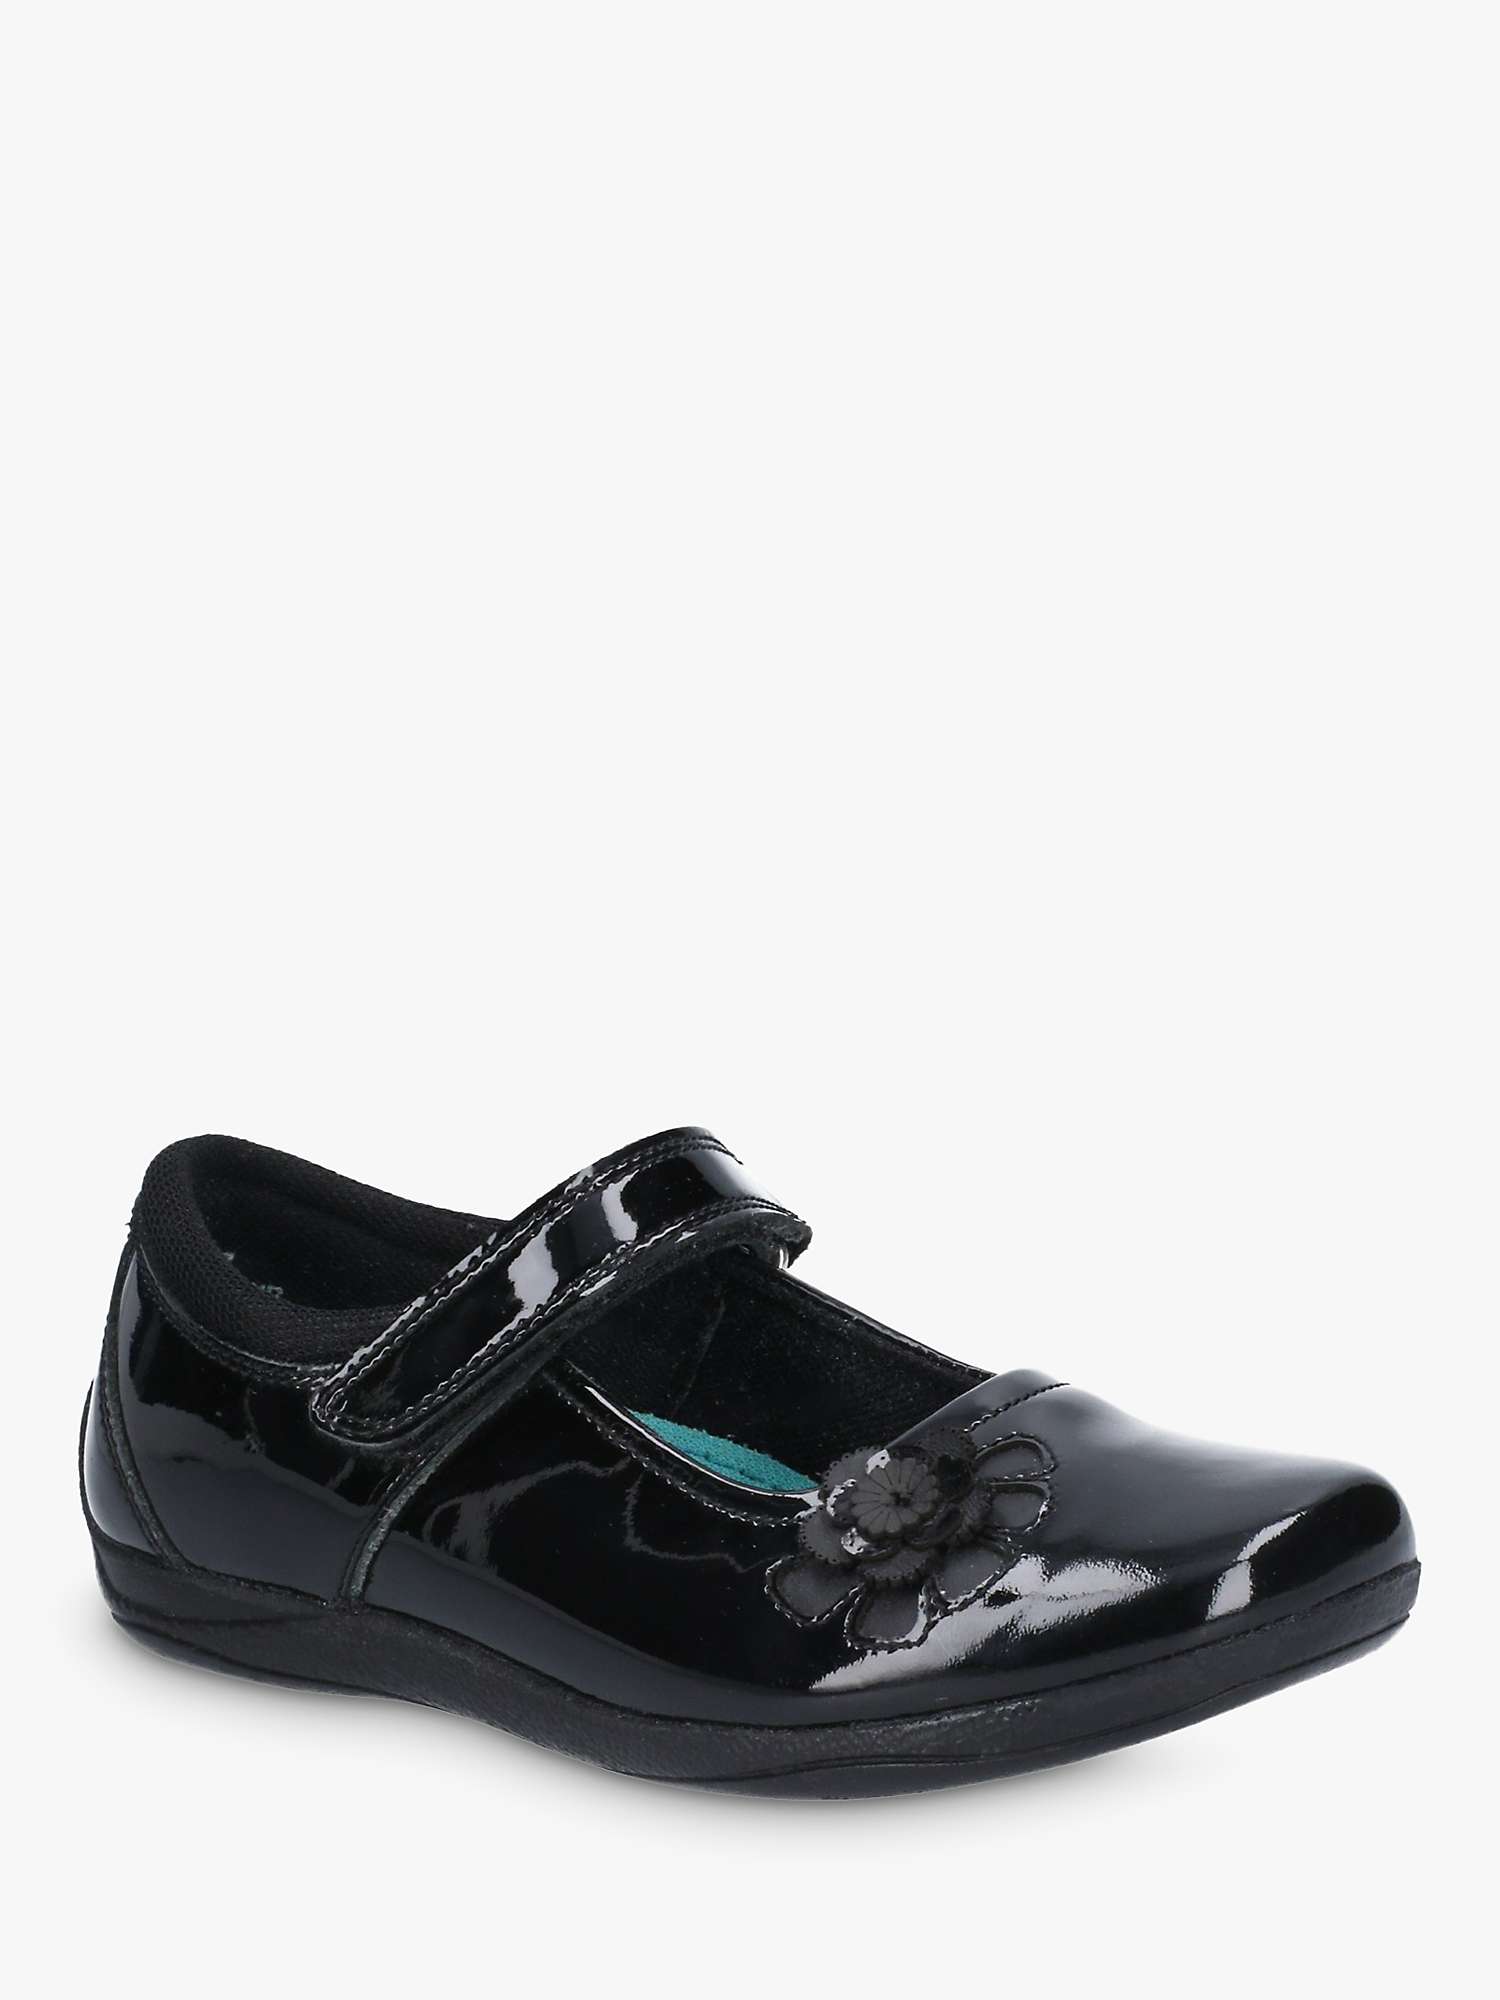 Buy Hush Puppies Kids' Jessica Junior Patent Leather School Shoes, Black Online at johnlewis.com